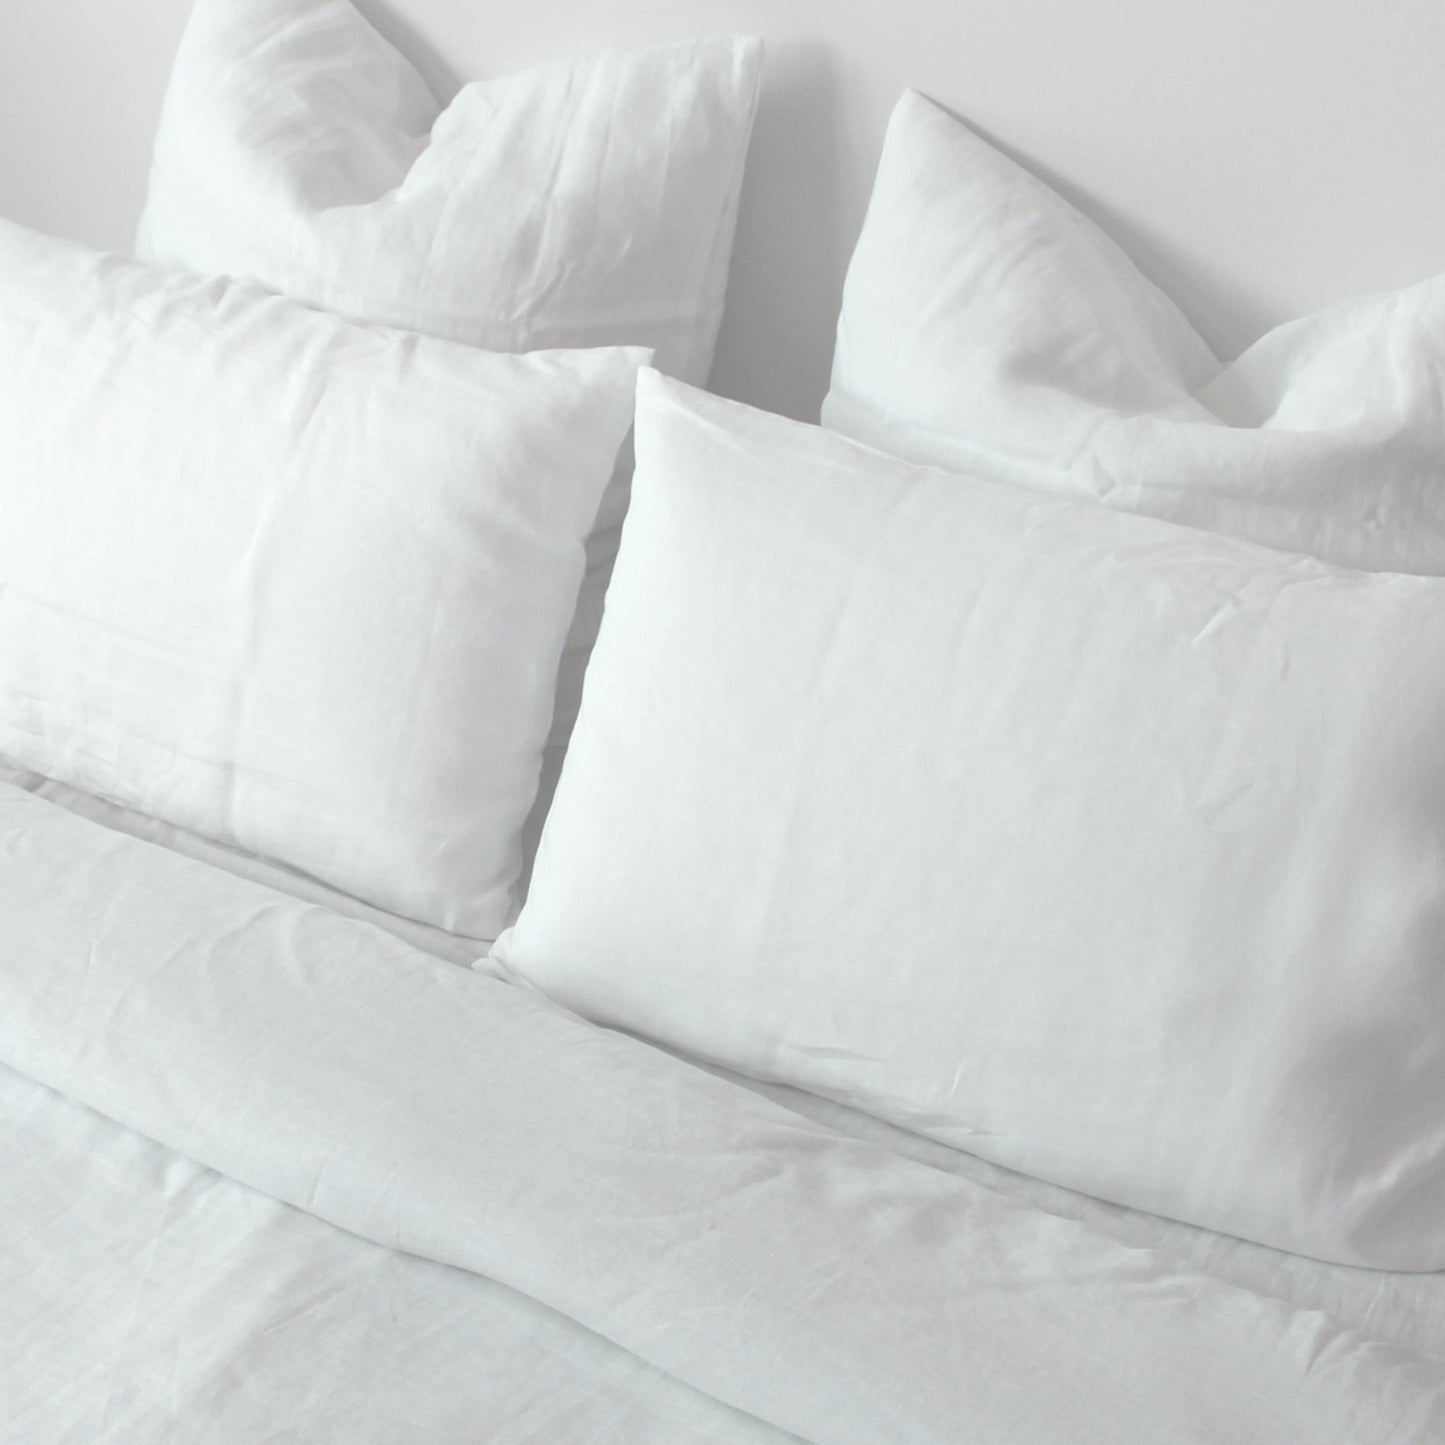 pure hemp linen pillowcases in white European and standard sizes